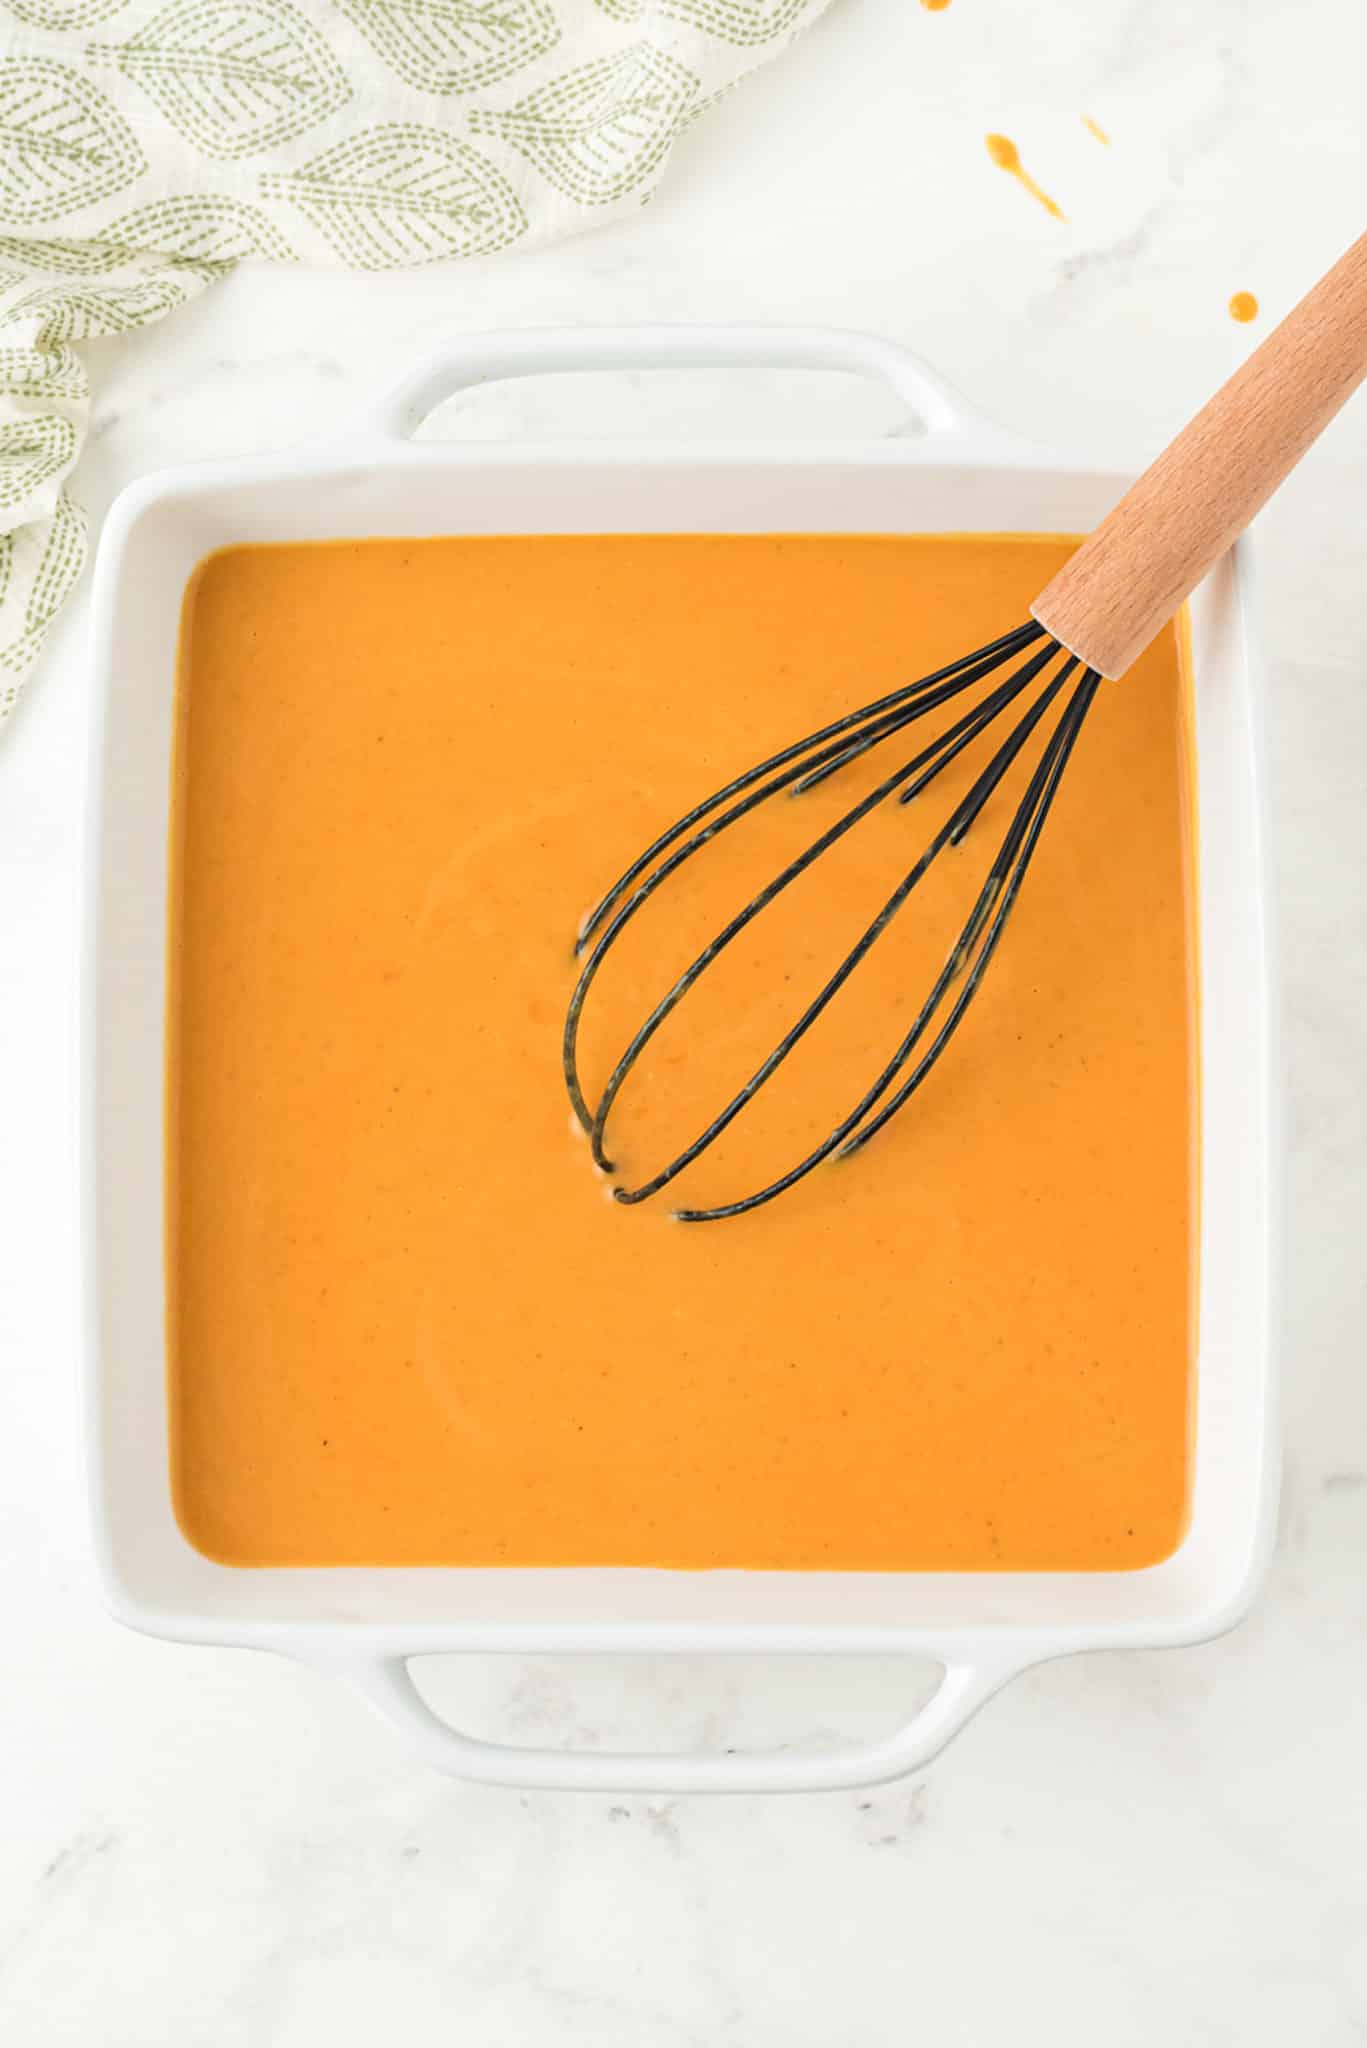 pumpkin pudding in a bowl.